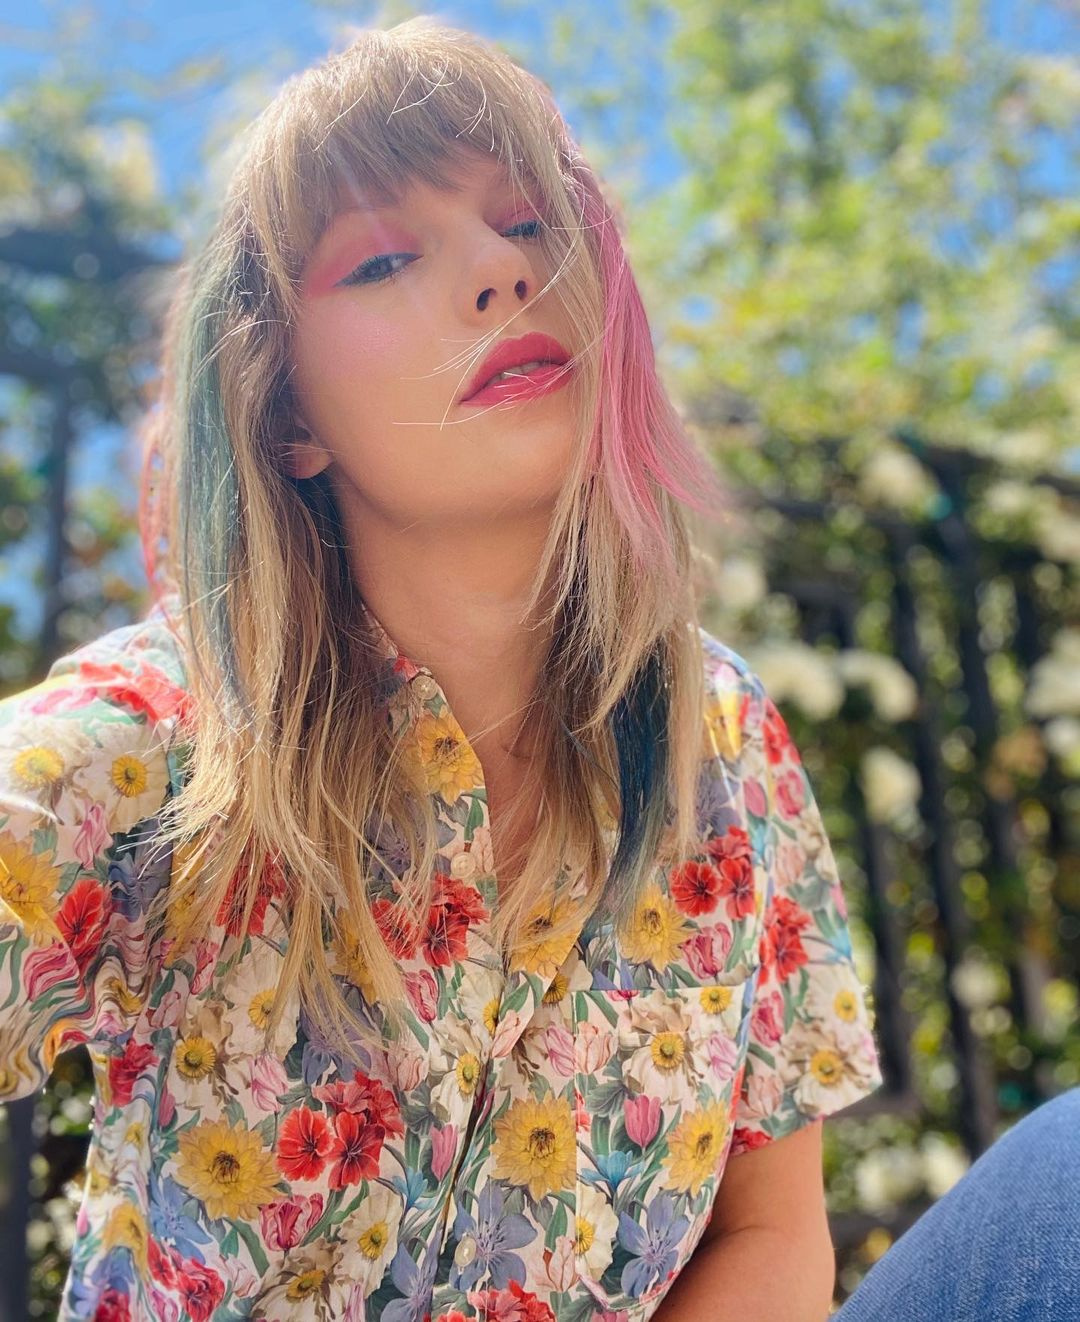 Taylor Swift (Image: Taylor Swift Instagram) 